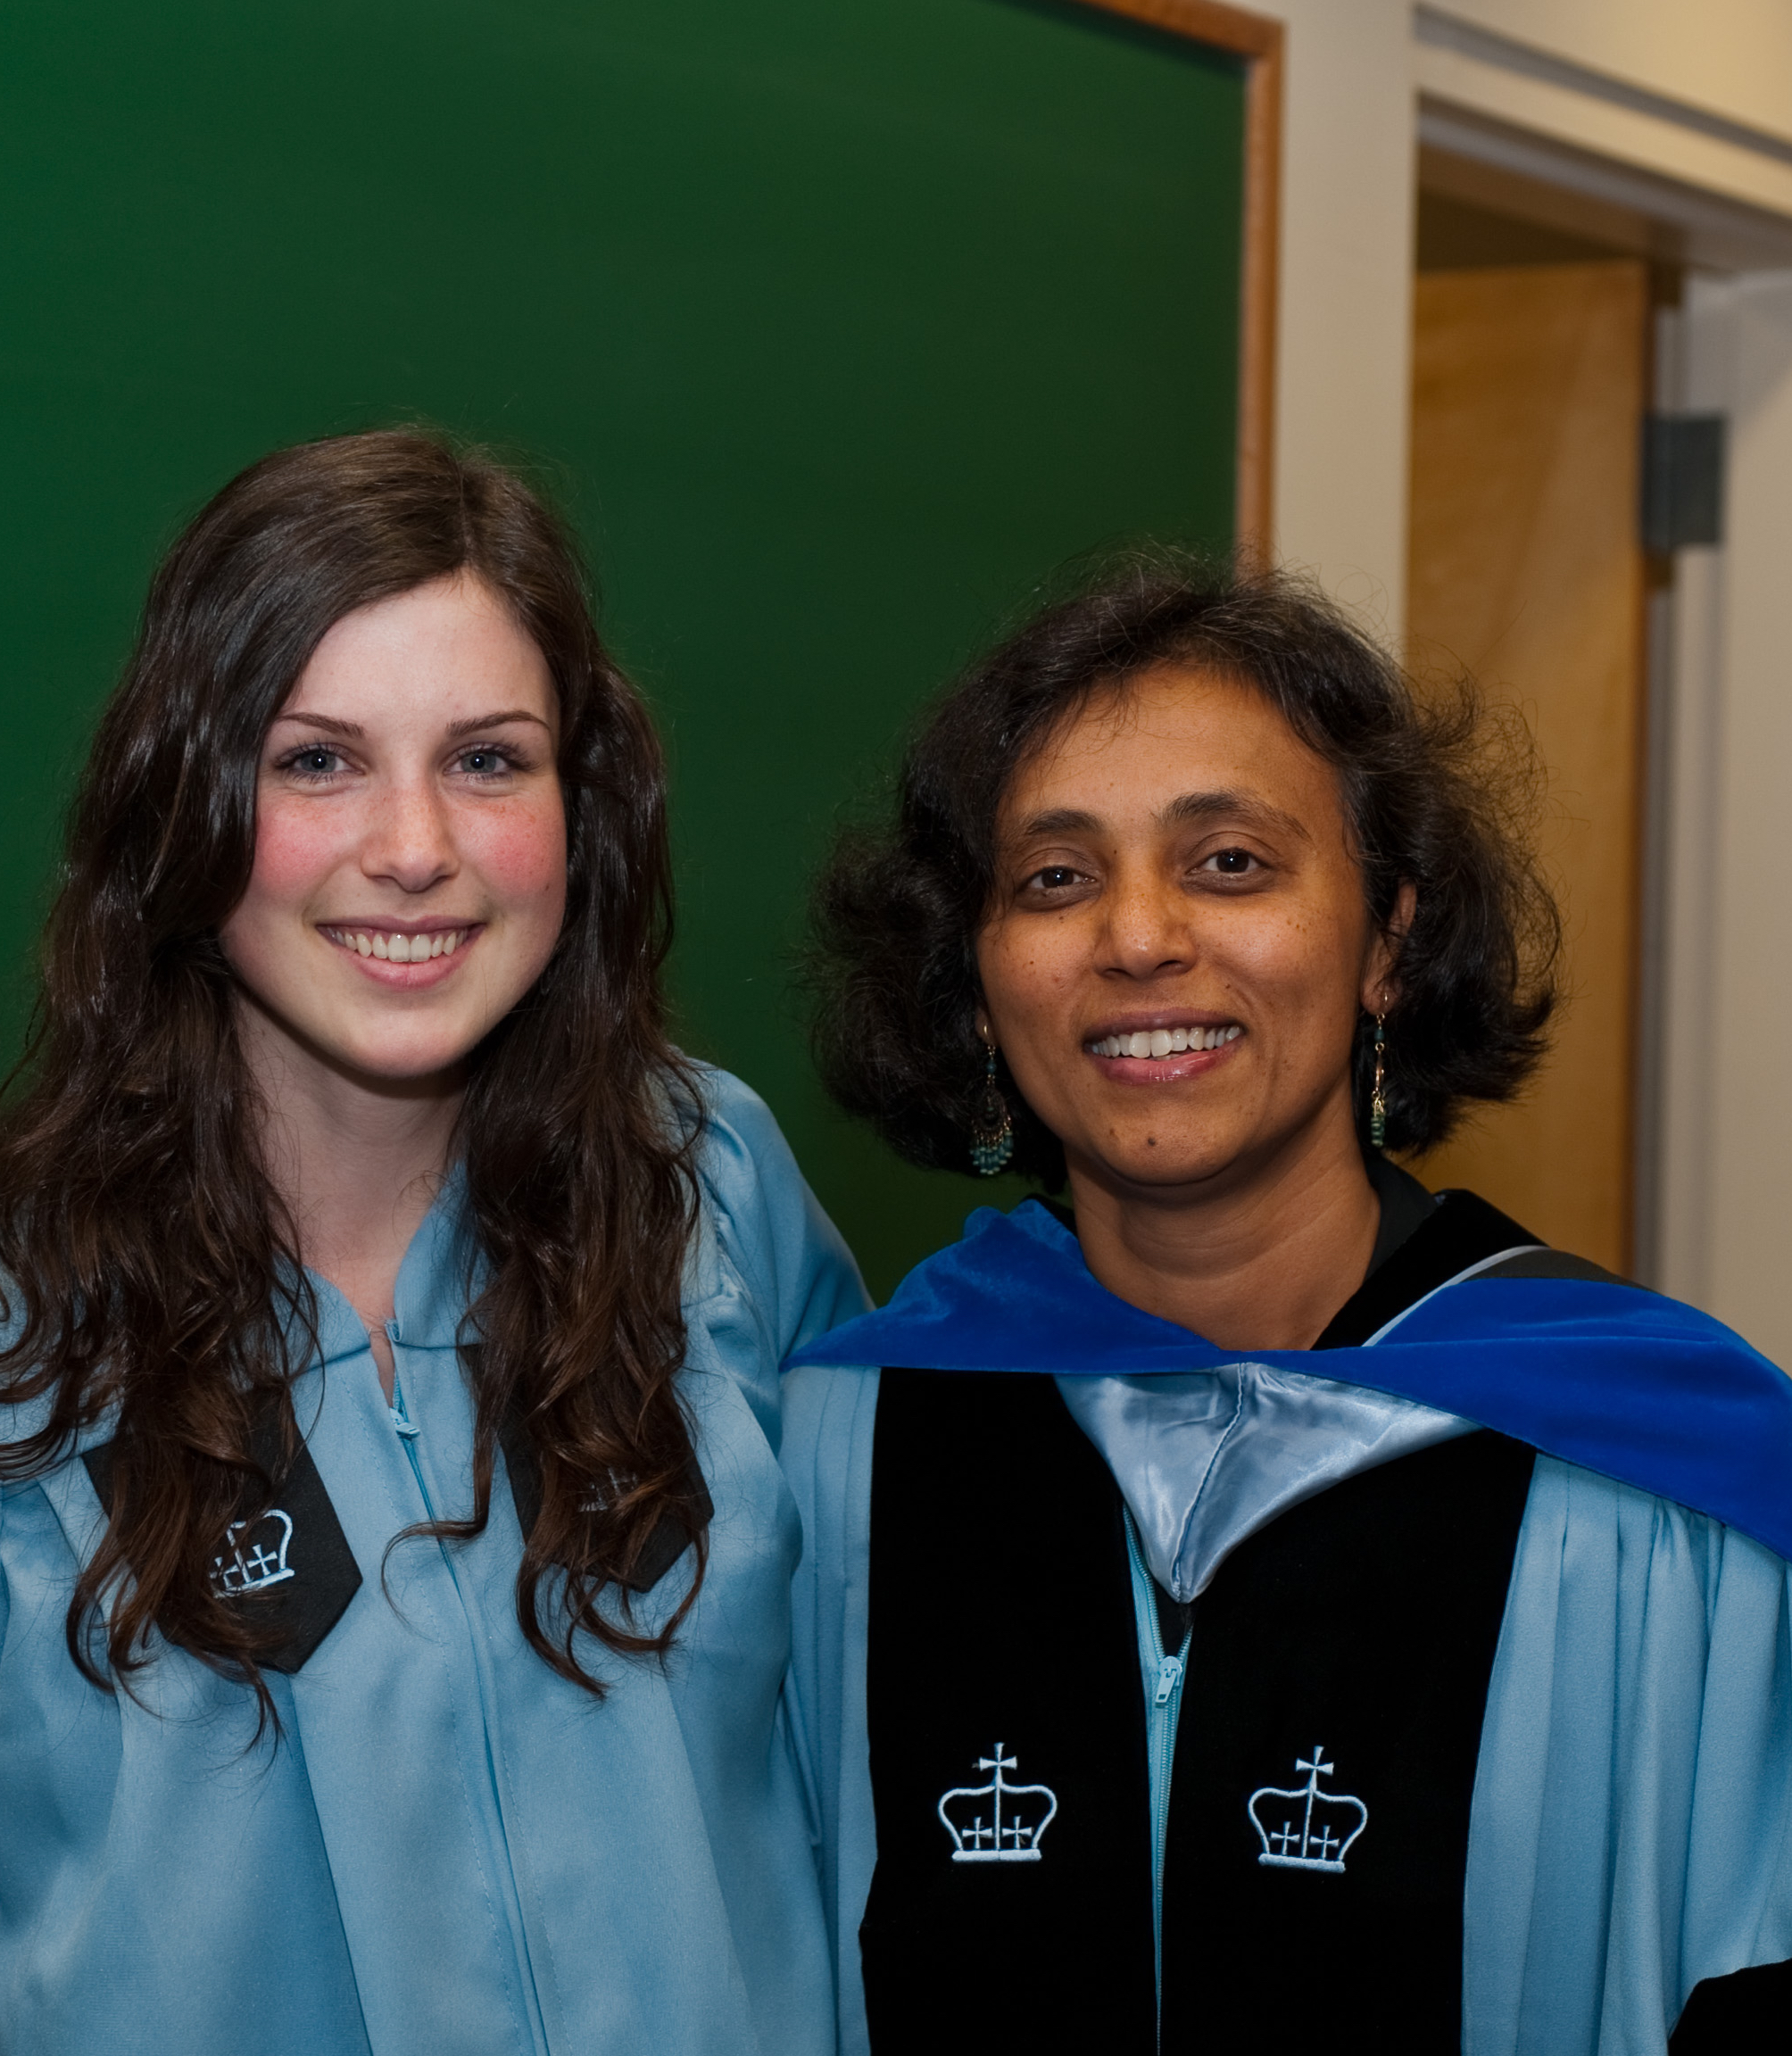 Kara at her Barnard graduation with Mukherjee.